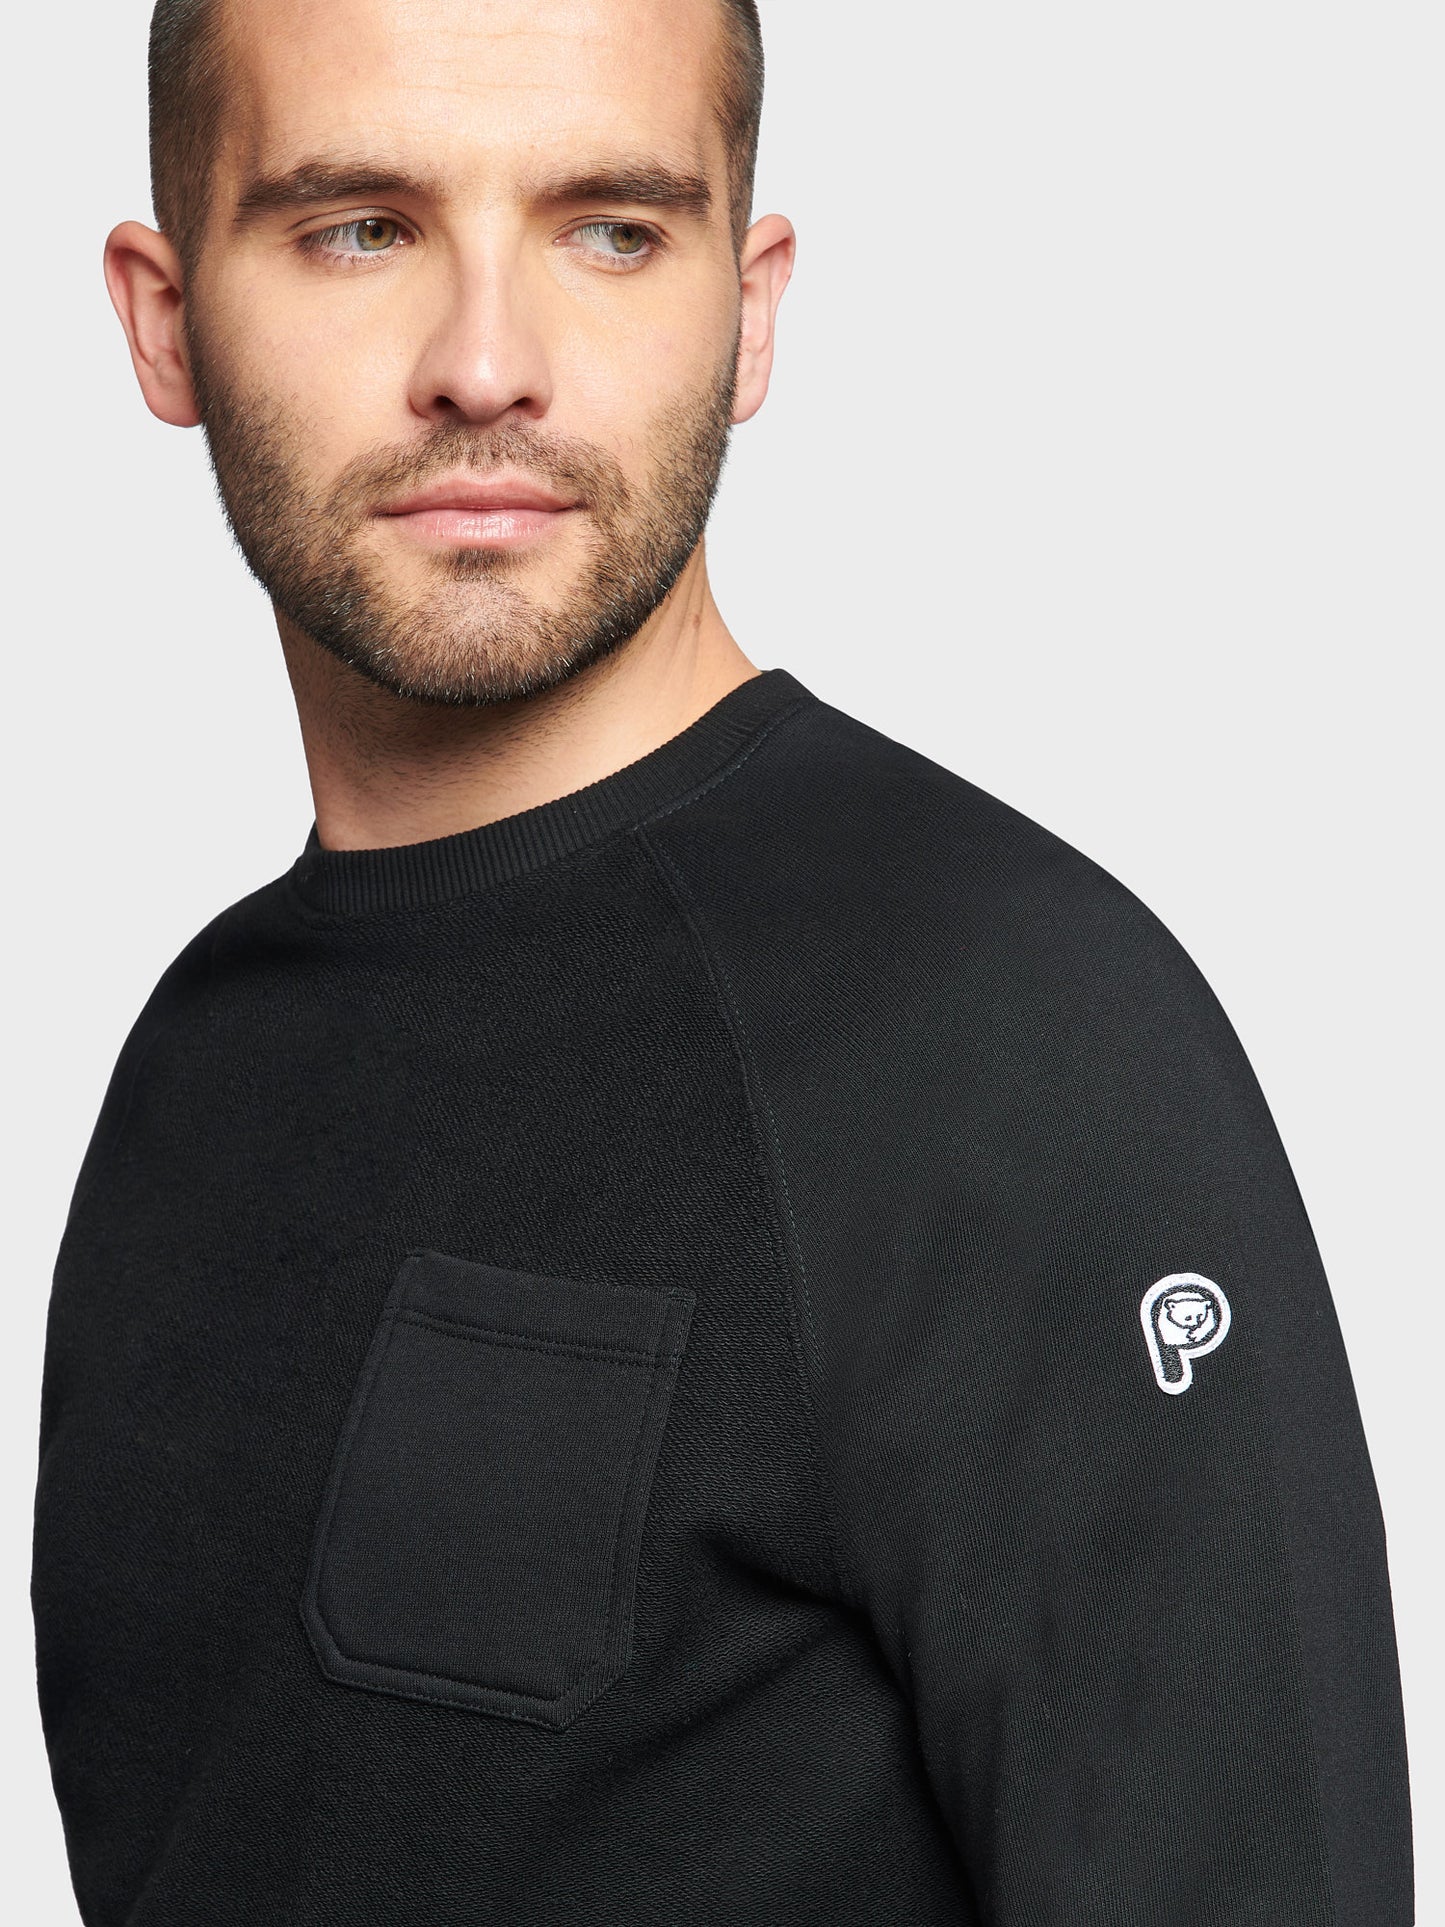 P Bear Reverse Loopback Sweater in Black